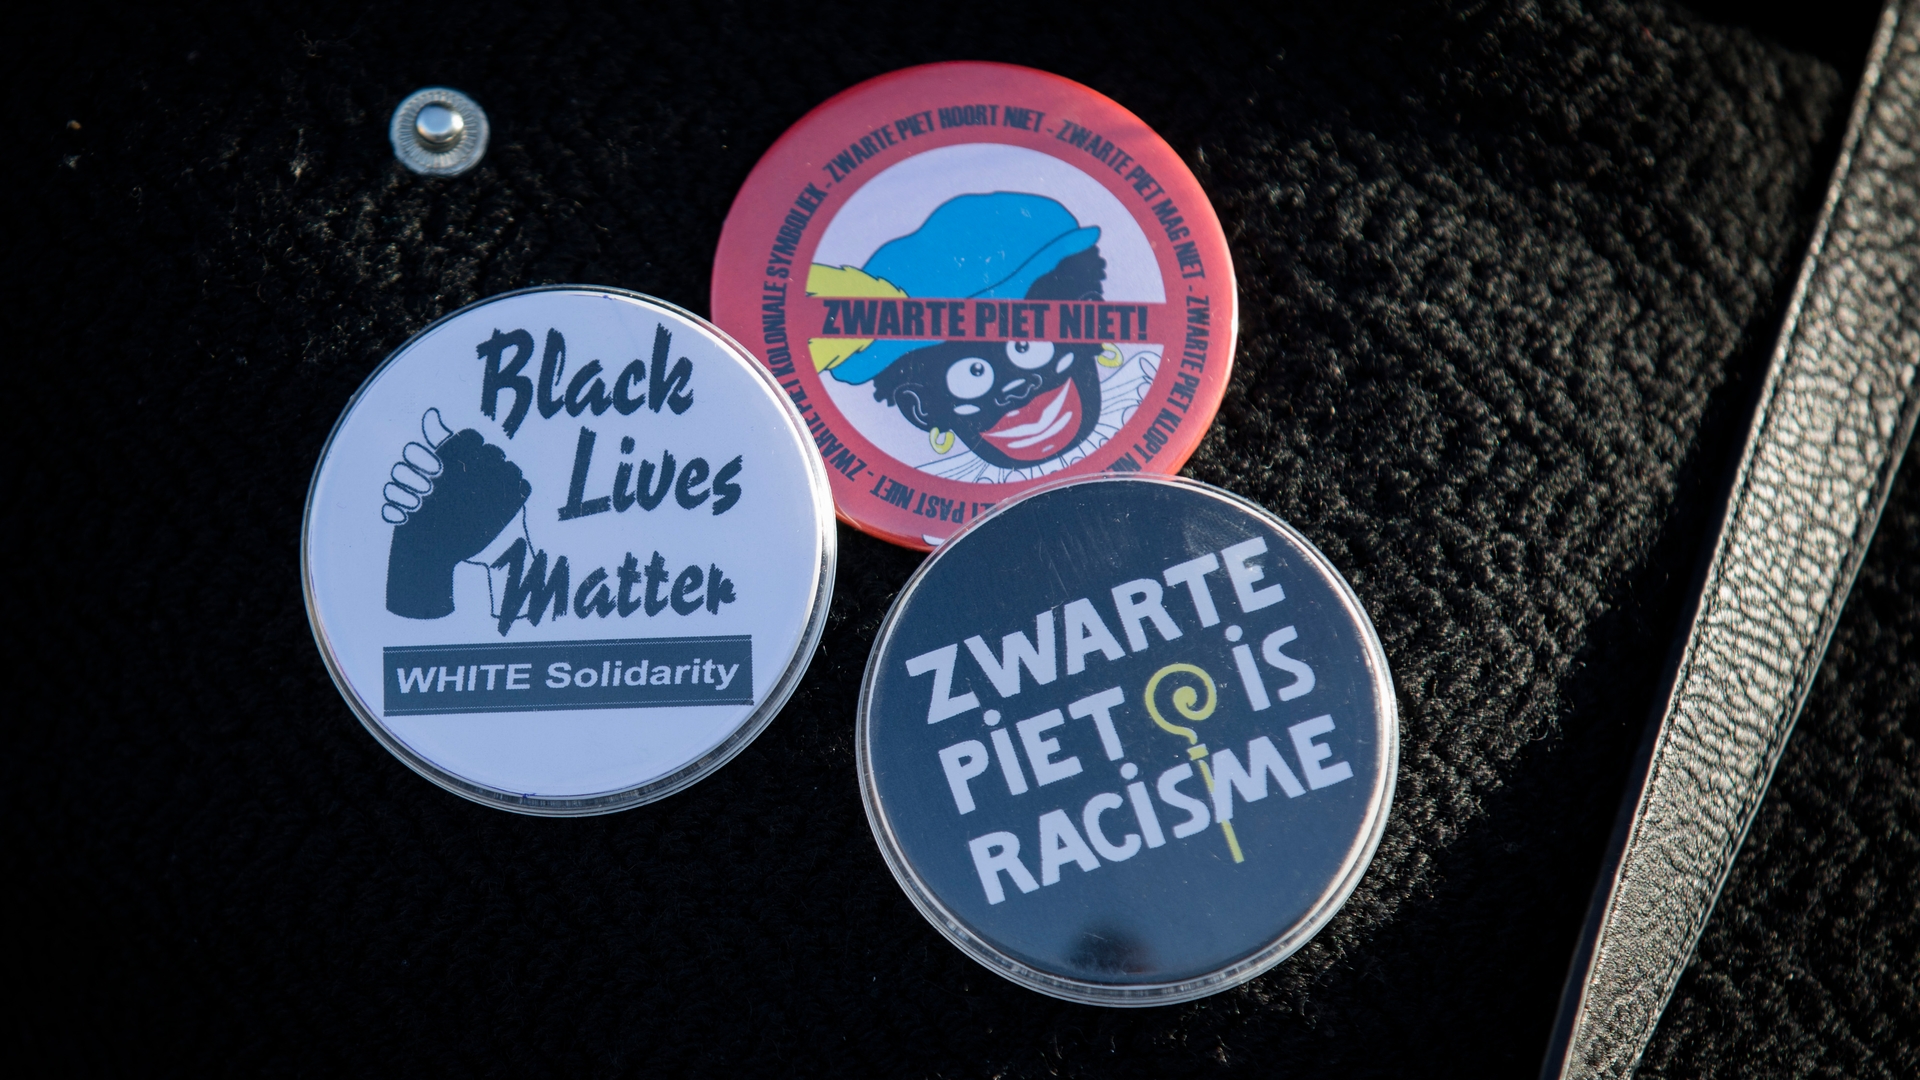 Protest Kick Out Zwarte Piet